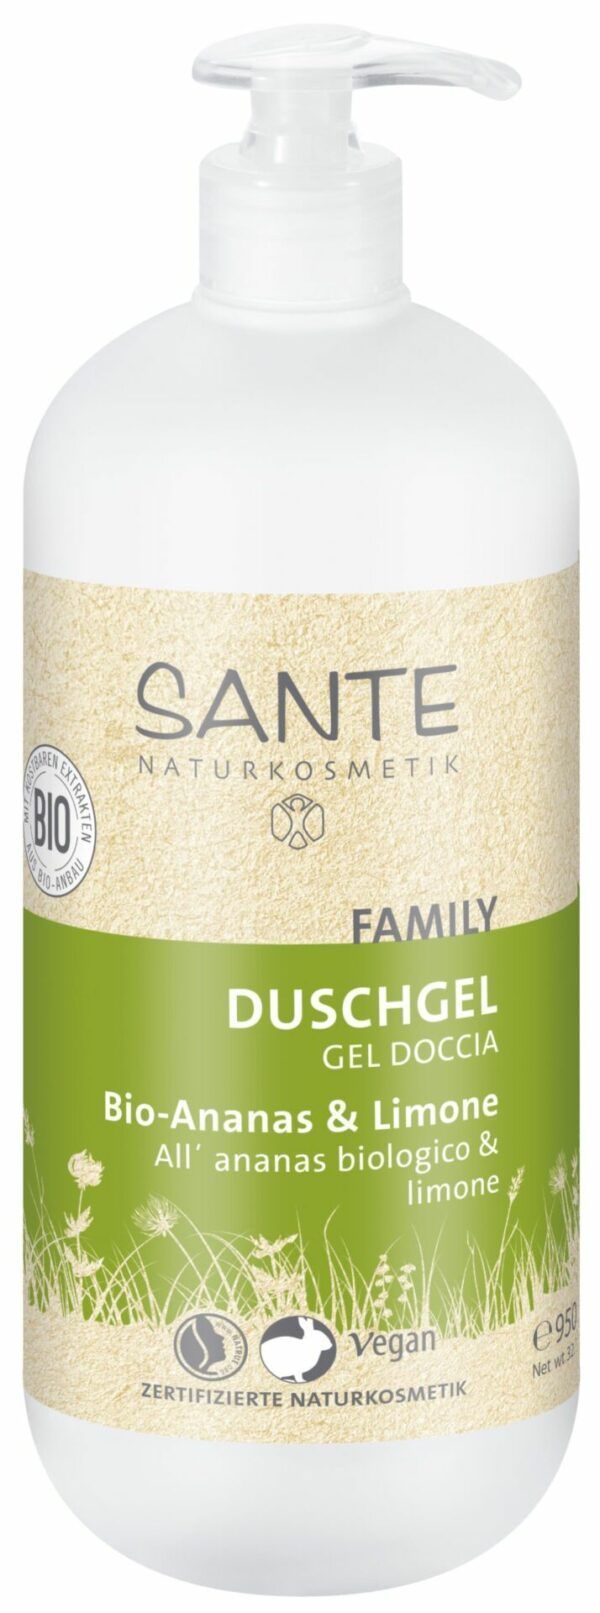 Sante FAMILY Duschgel Bio-Ananas&Limone 950ml